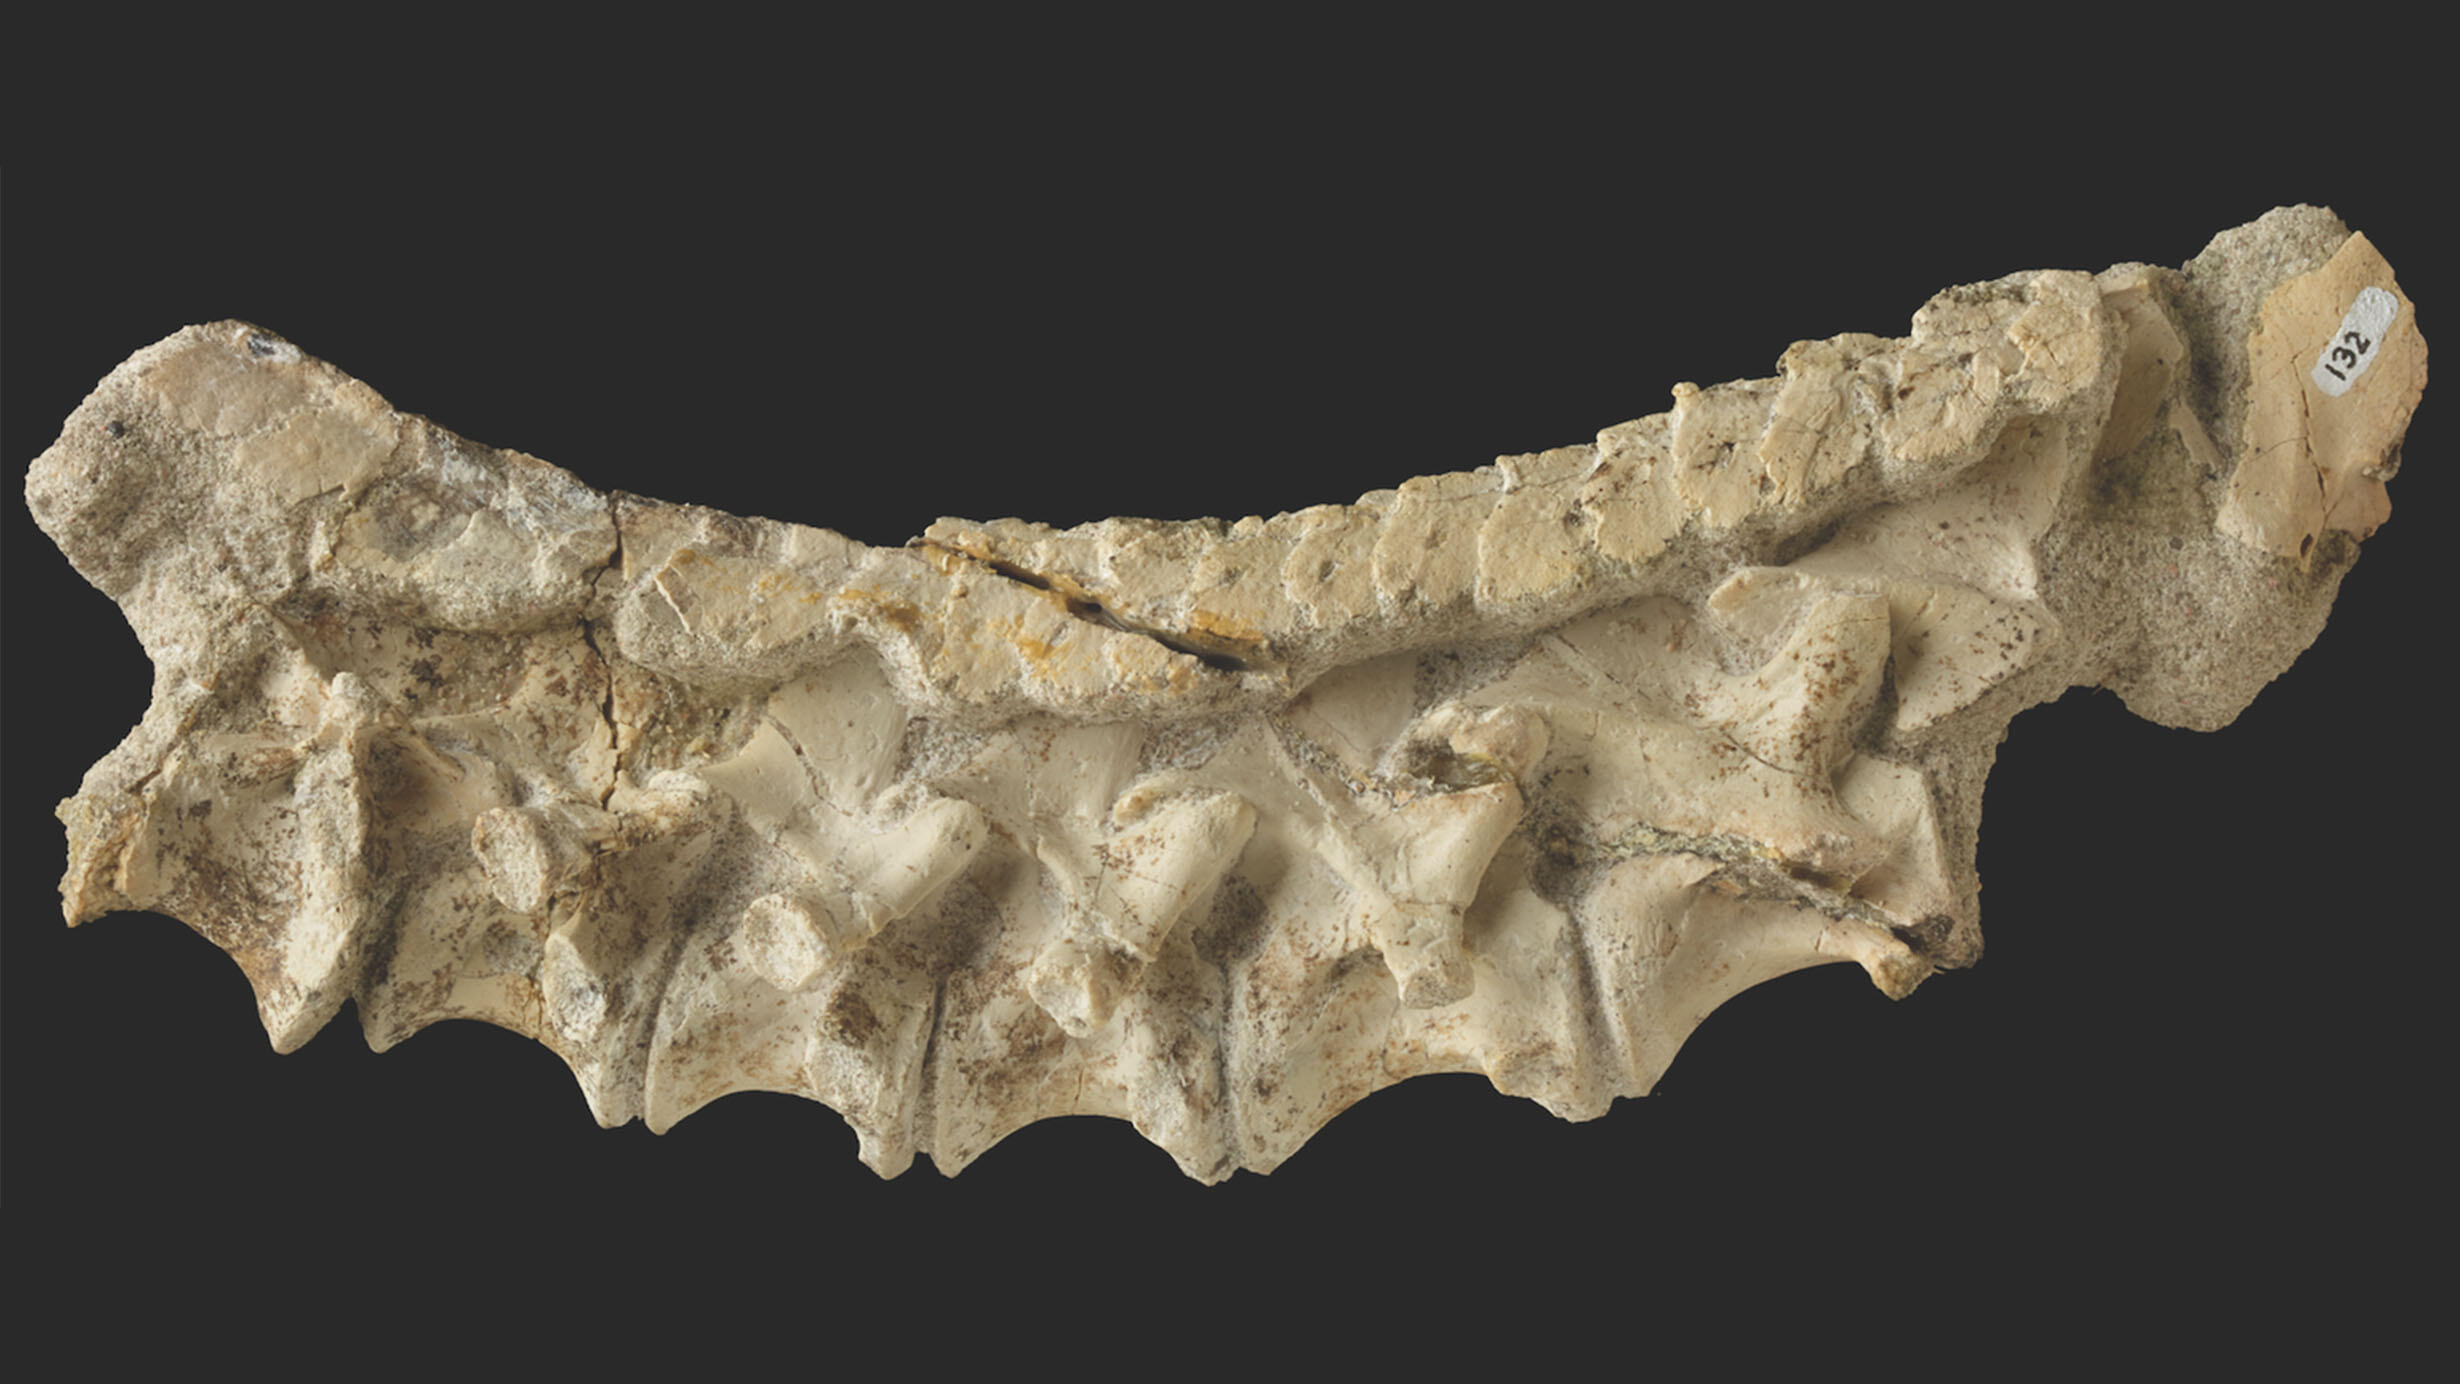 Curved and ridged fossilized cervial vertebra of a new archosaur species, Mambachiton fiandohana.